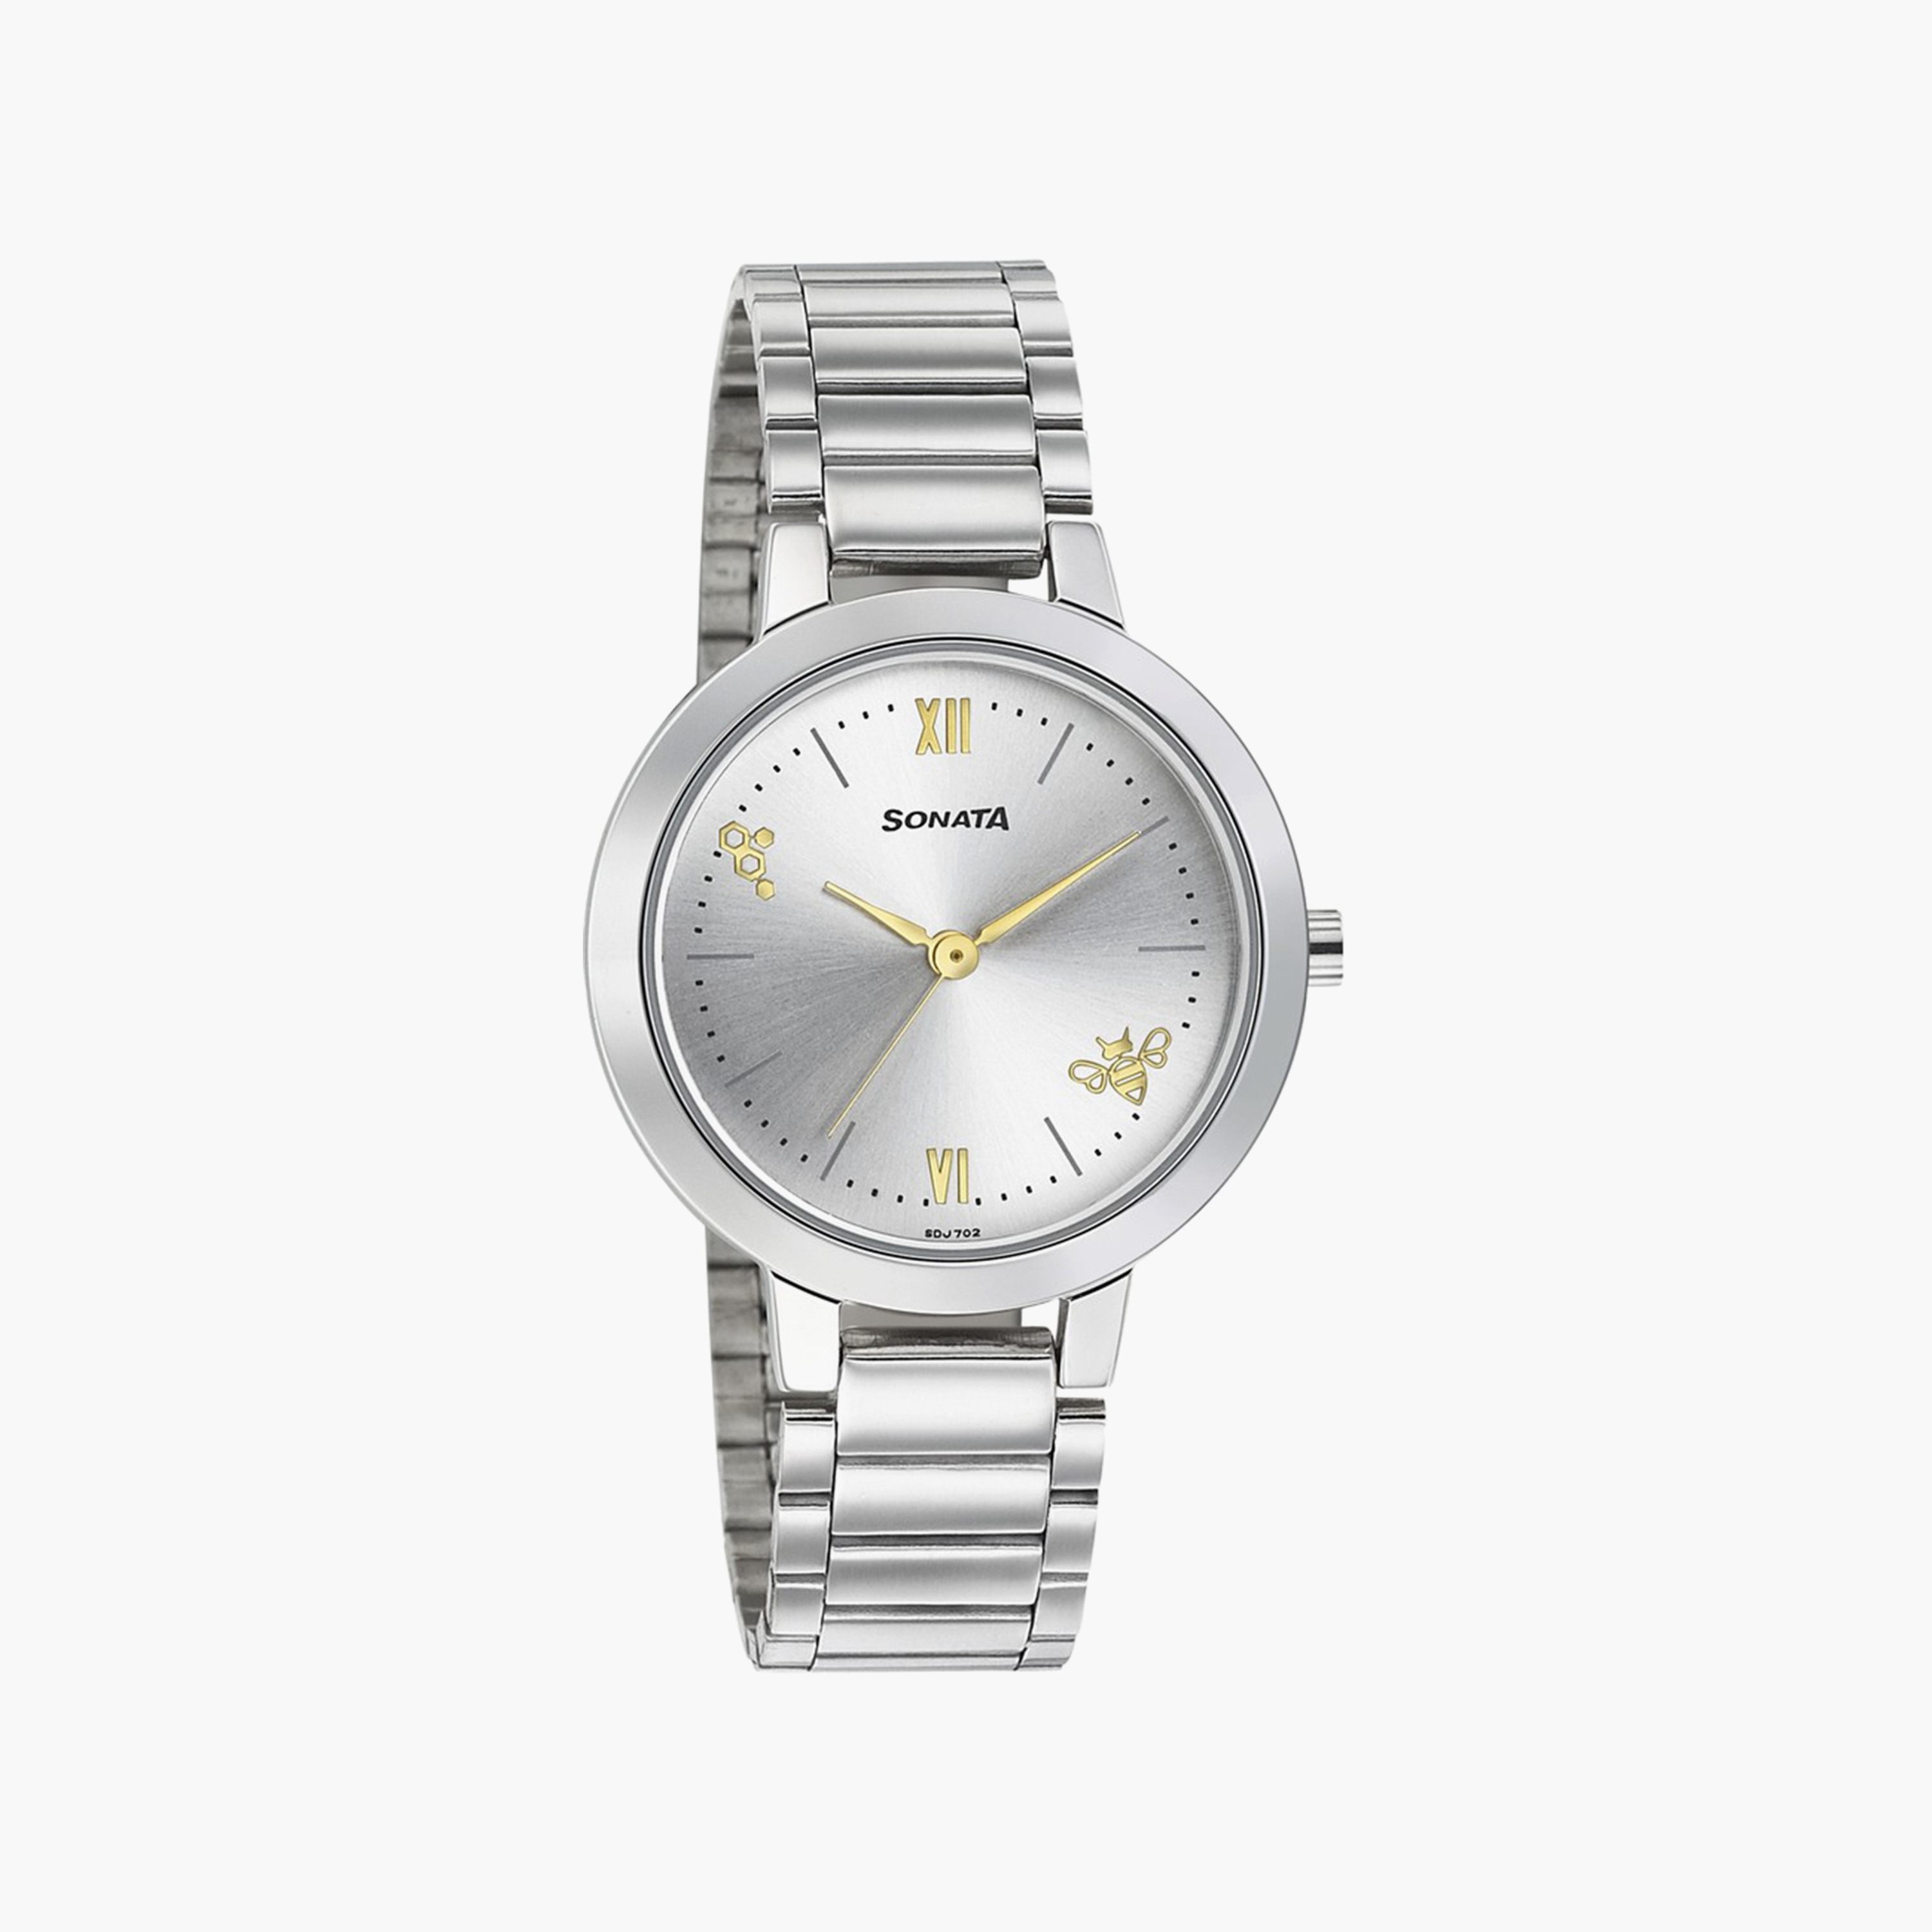 Sonata Silver Dial Analog Watch for Men-NR77082SM02W : Amazon.in: Fashion